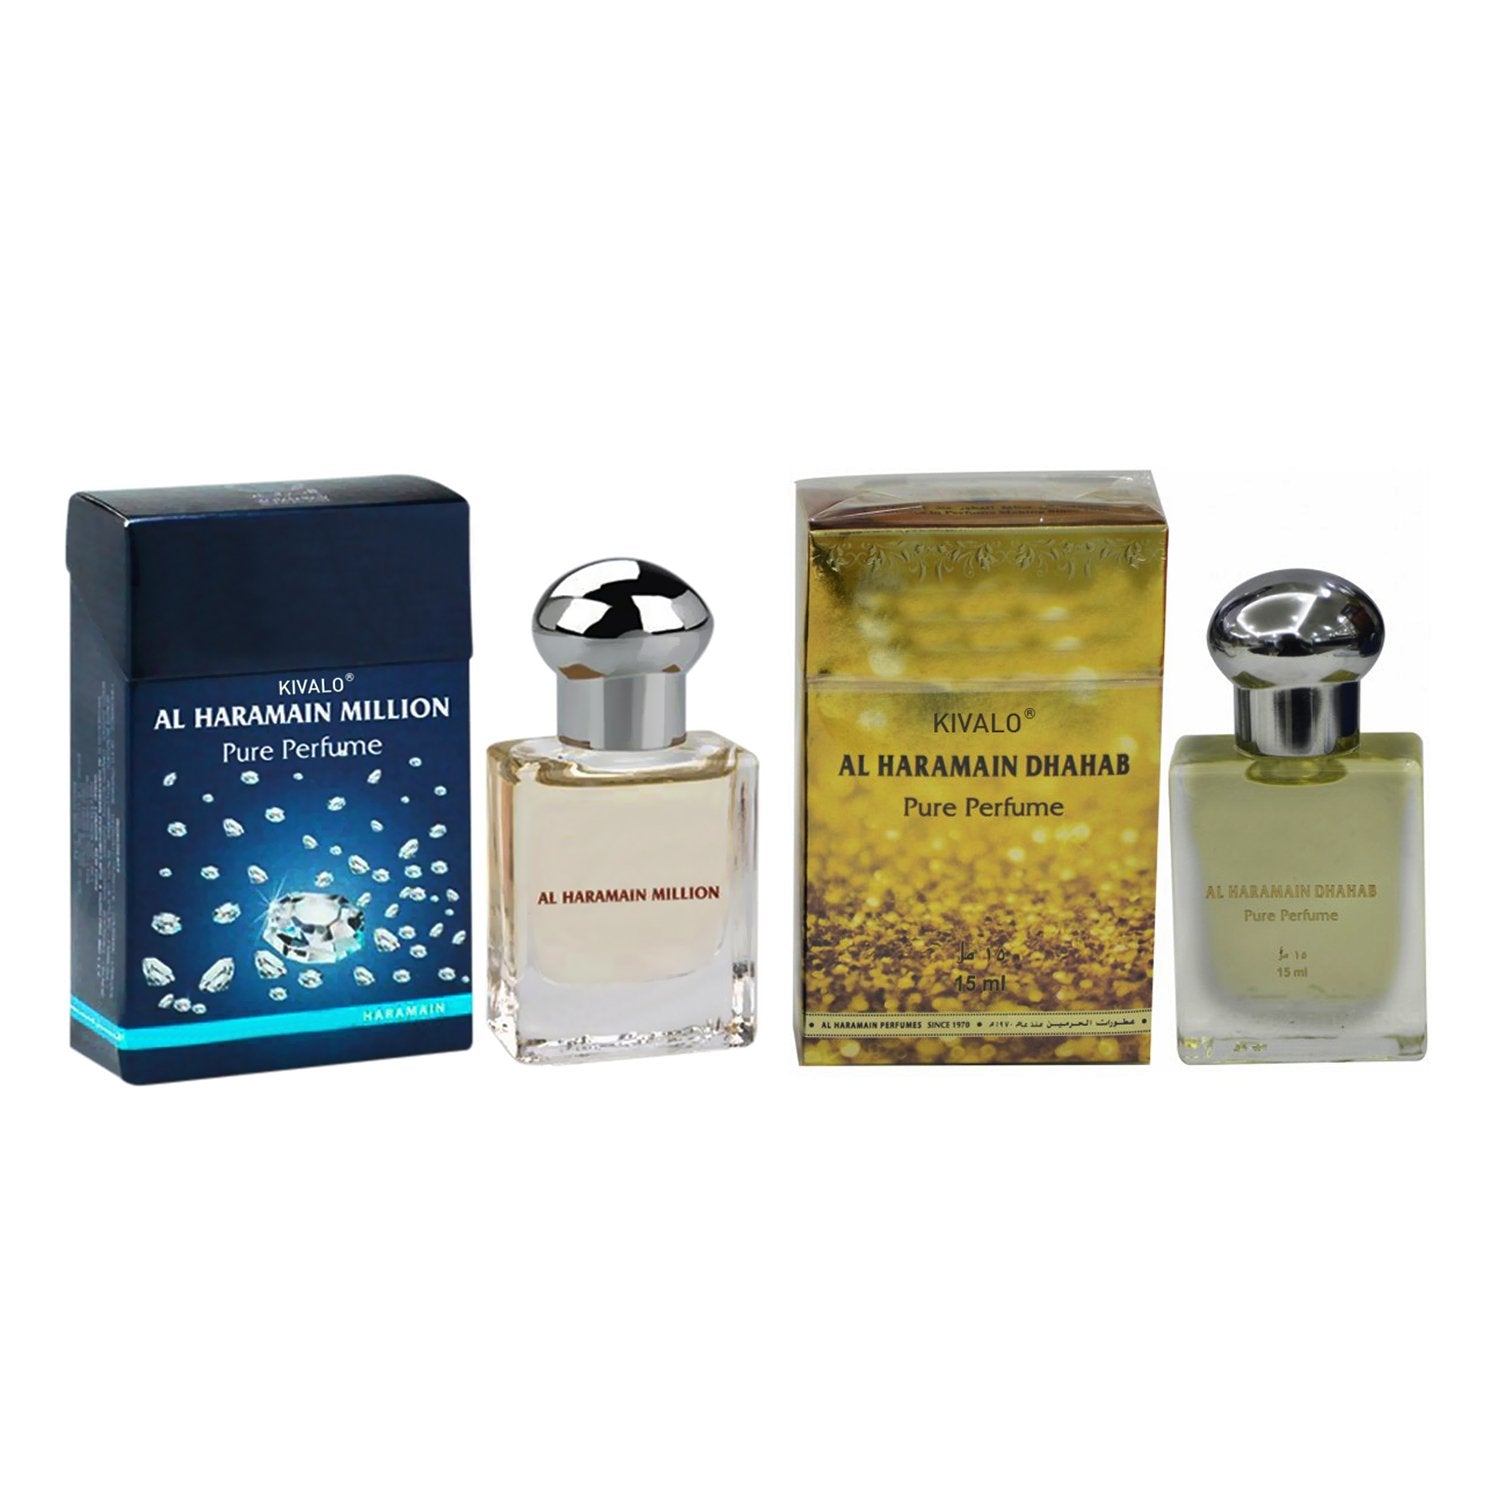 Al Haramain Million & Dhahab Fragrance Pure Original Roll on Perfume Oil Pack of 2 (Attar) - 2 x 15 ml